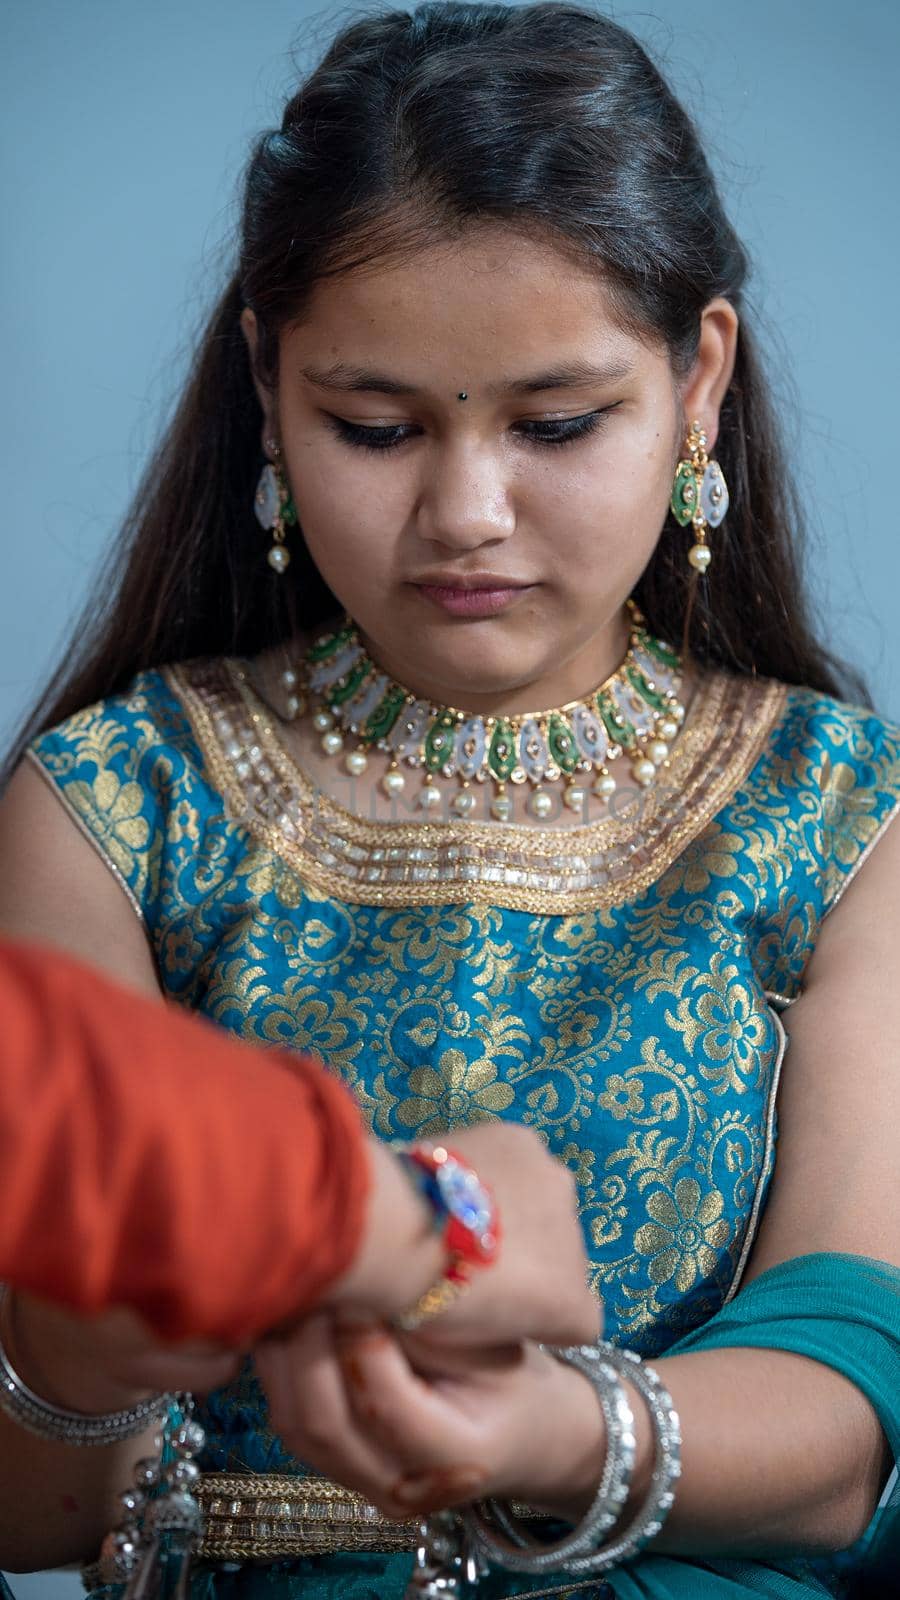 Sister tying the rakhi, Raksha Bandhan to brother's wrist during festival or ceremony - Raksha Bandhan celebrated across India as selfless love or relationship between brother and sister